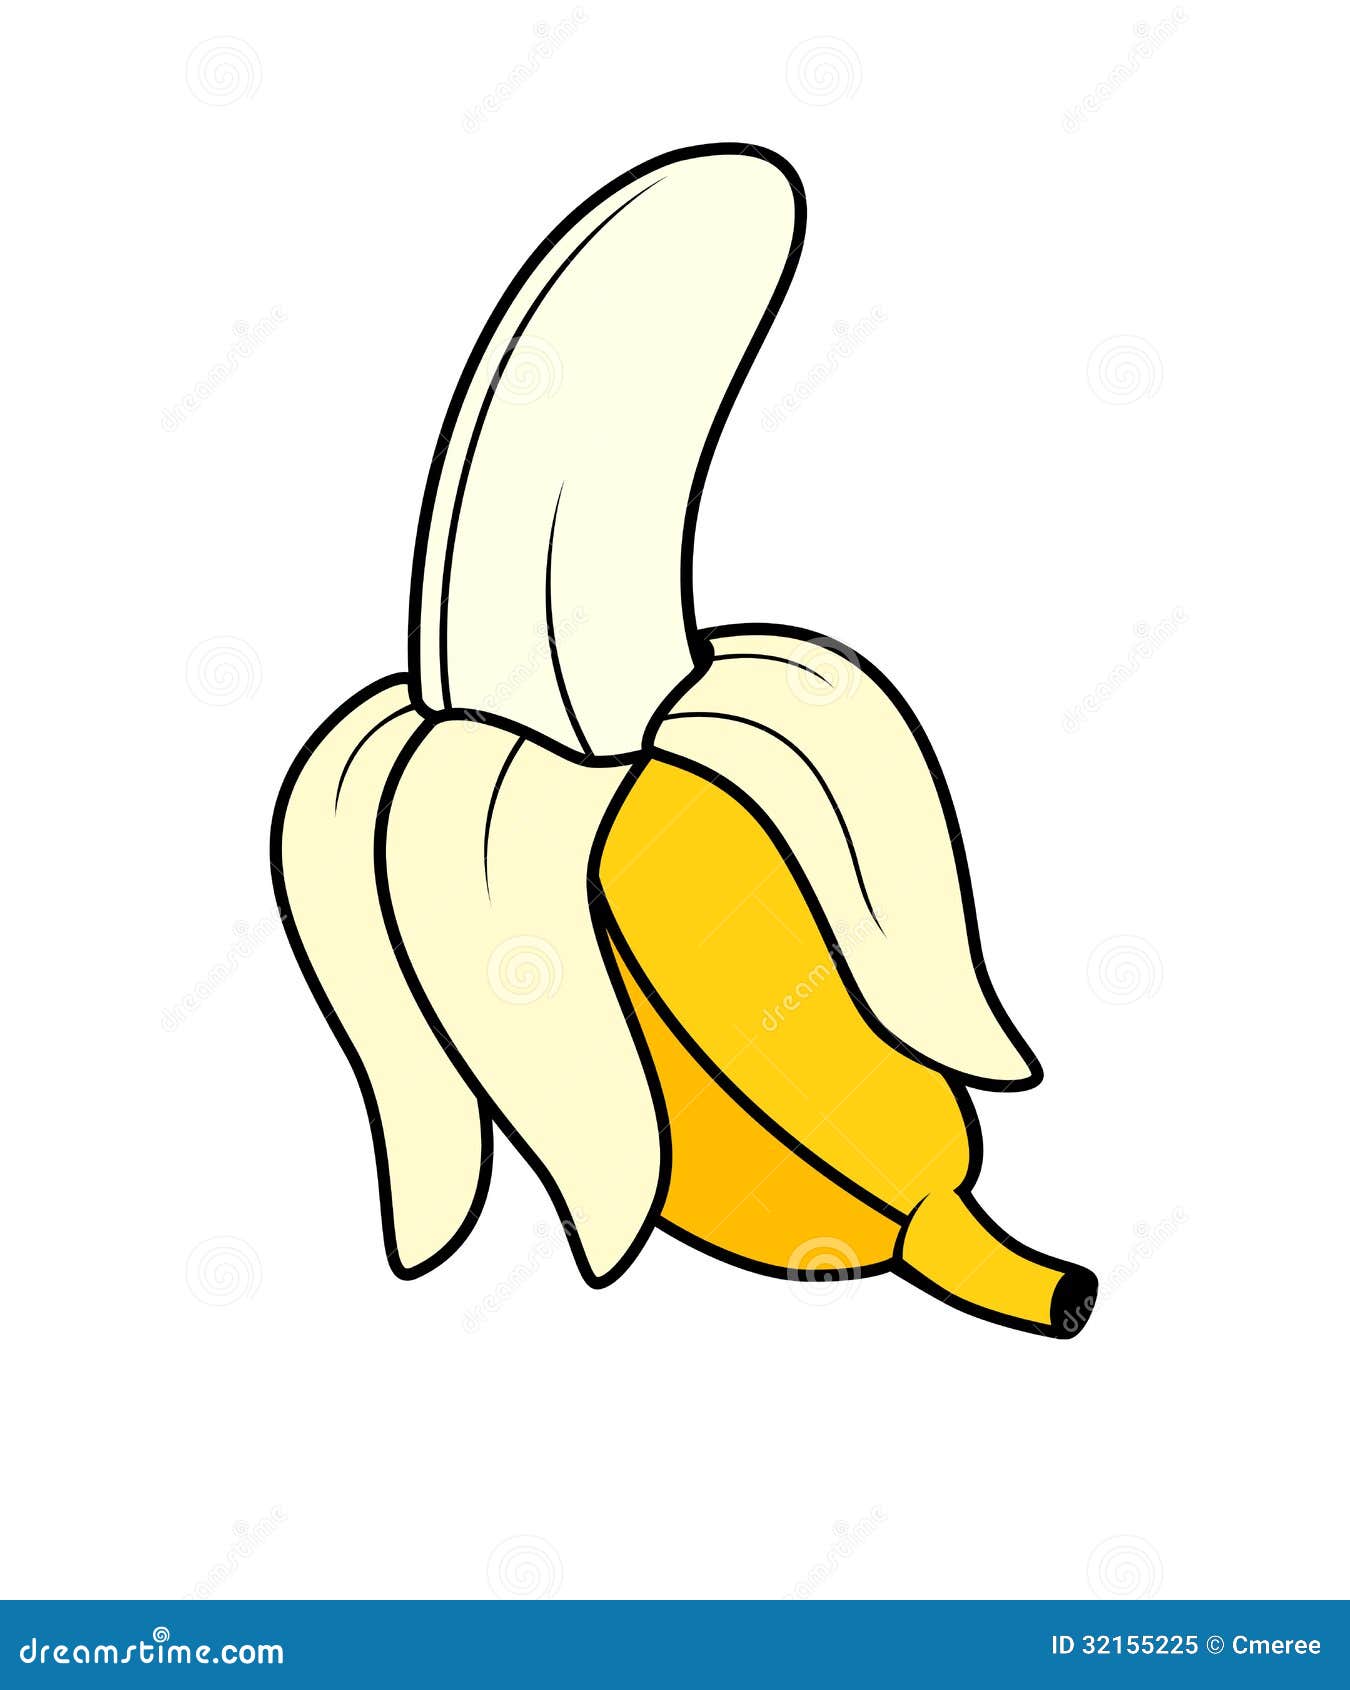 Banana Royalty Free Stock Photo - Image: 32155225